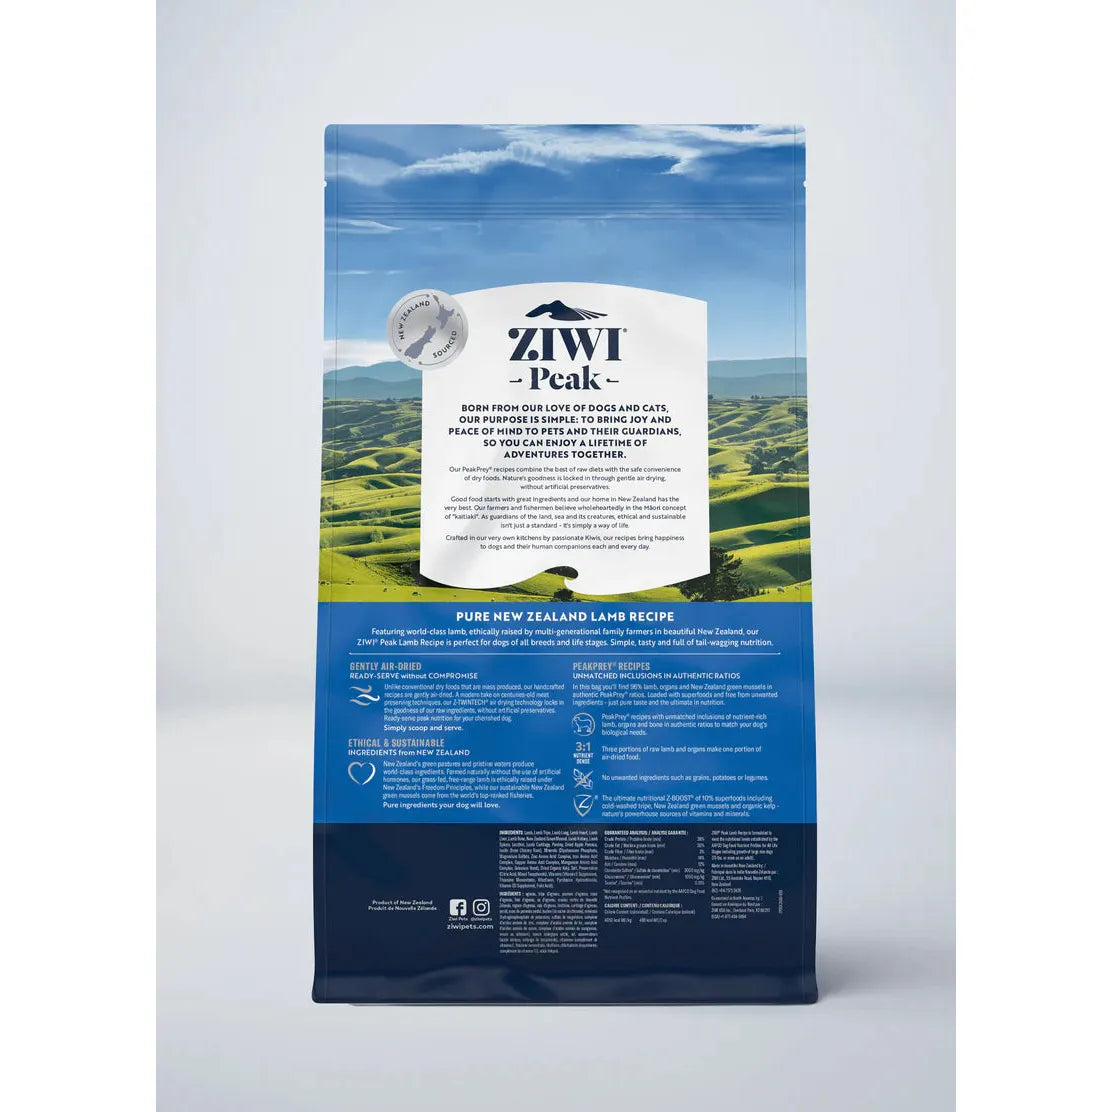 ZIWI Peak Dog Food Air Dried Lamb Recipe